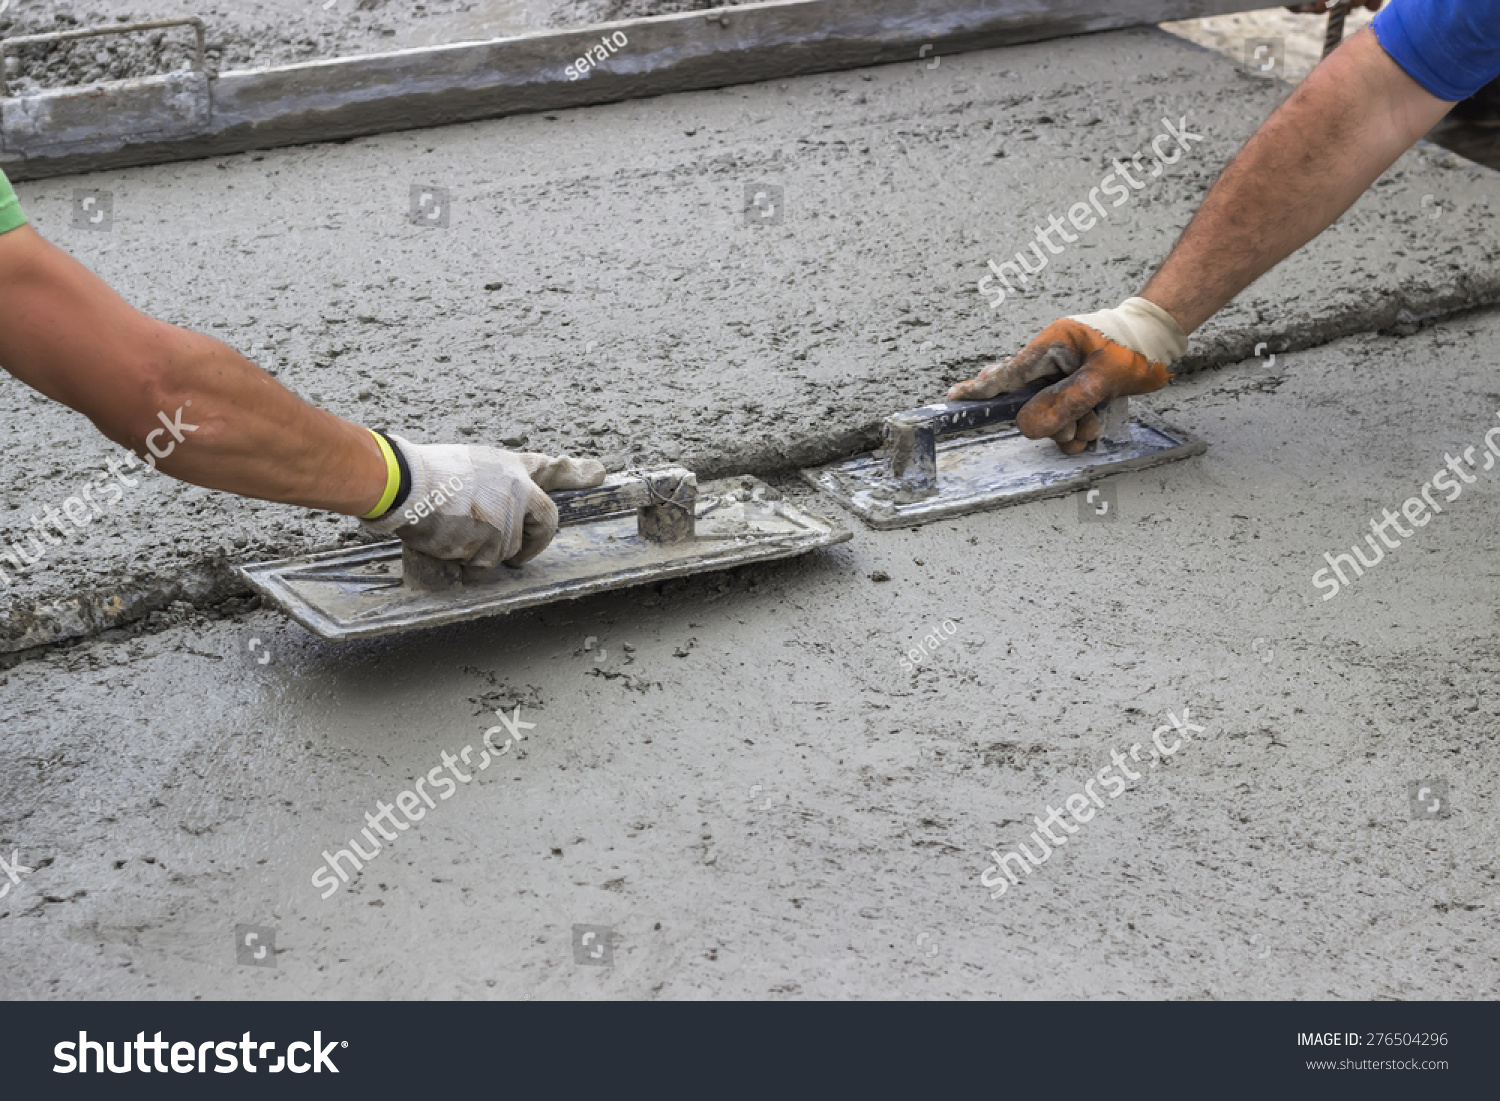 Leveling concrete with trowels, mason hands spreading poured concrete. Selective focus.
 #276504296